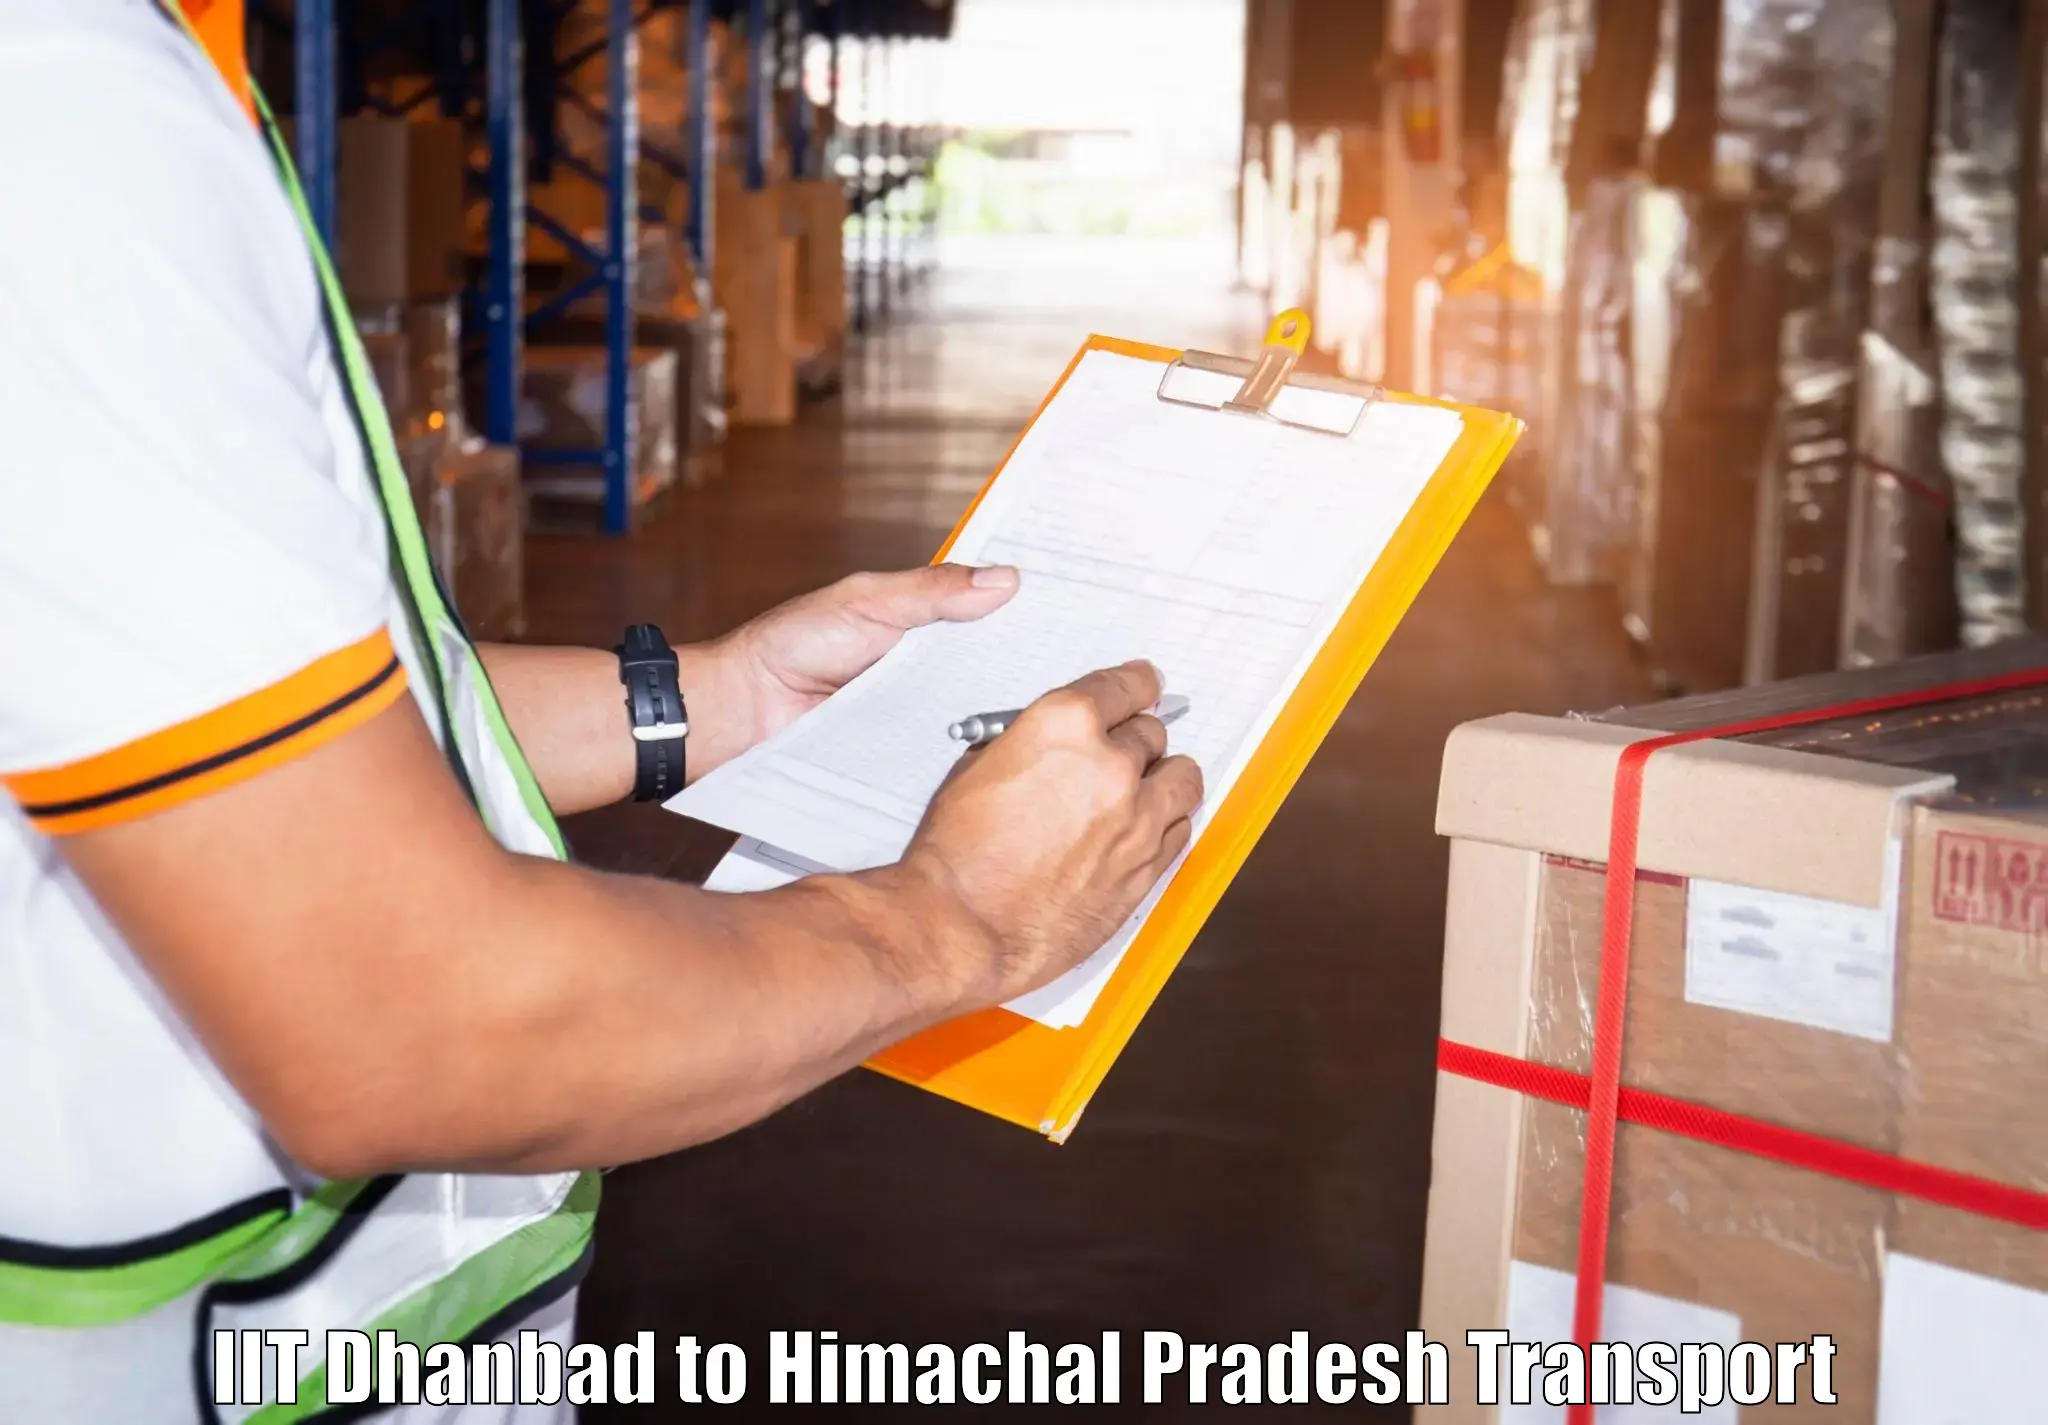 Online transport service IIT Dhanbad to Bilaspur Himachal Pradesh